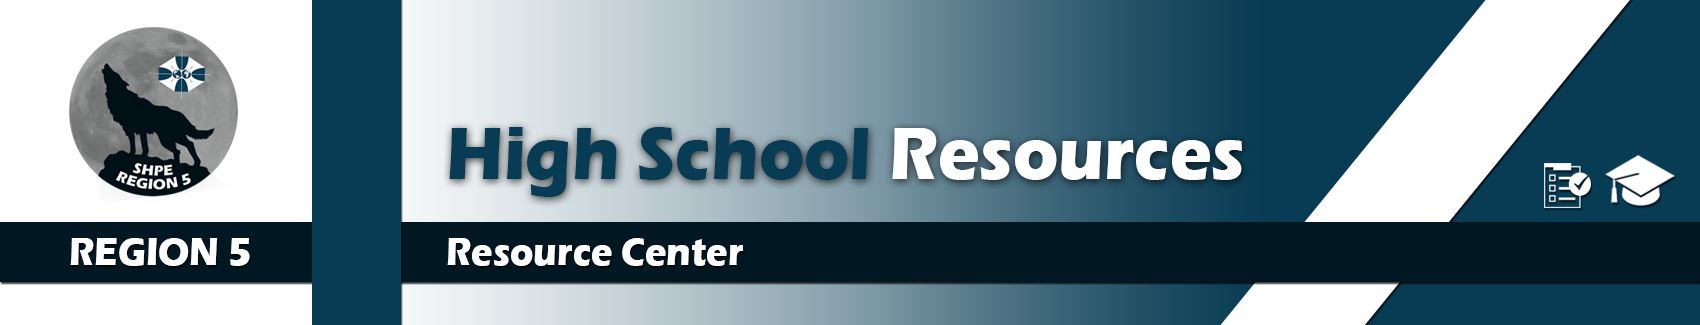 highschool-resources-banner